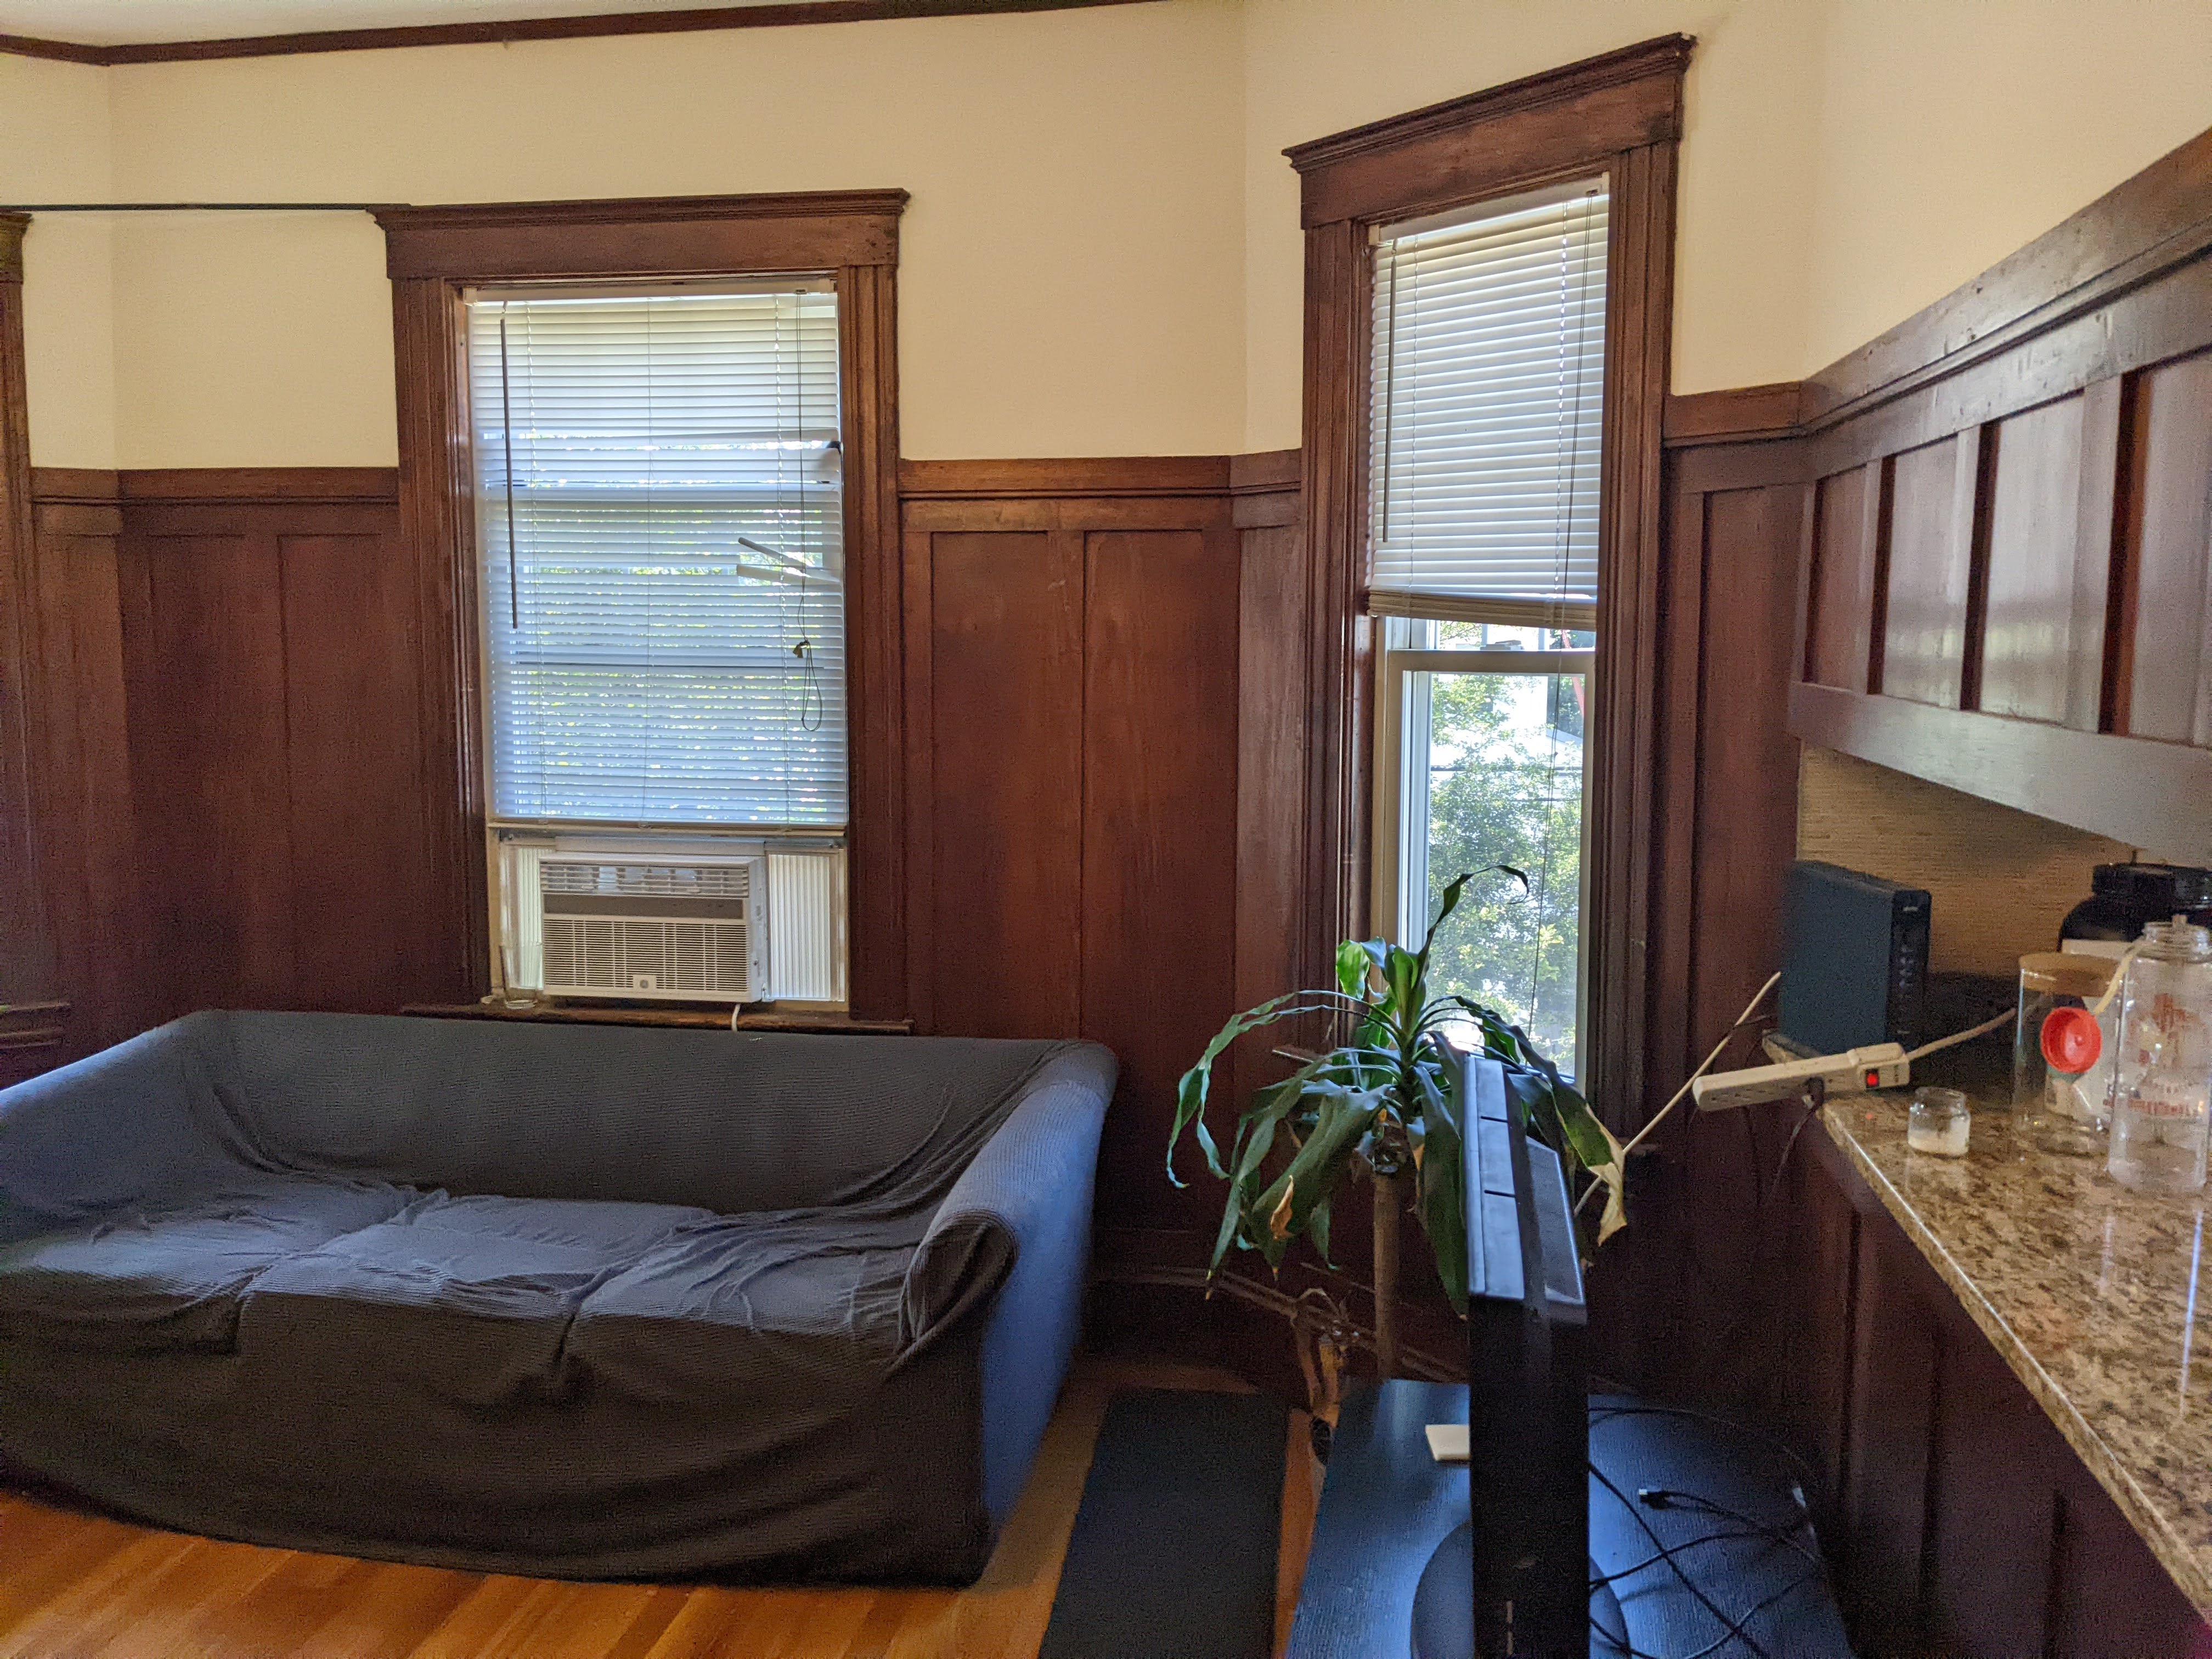 Photos of apartment on Main St.,Medford MA 02155